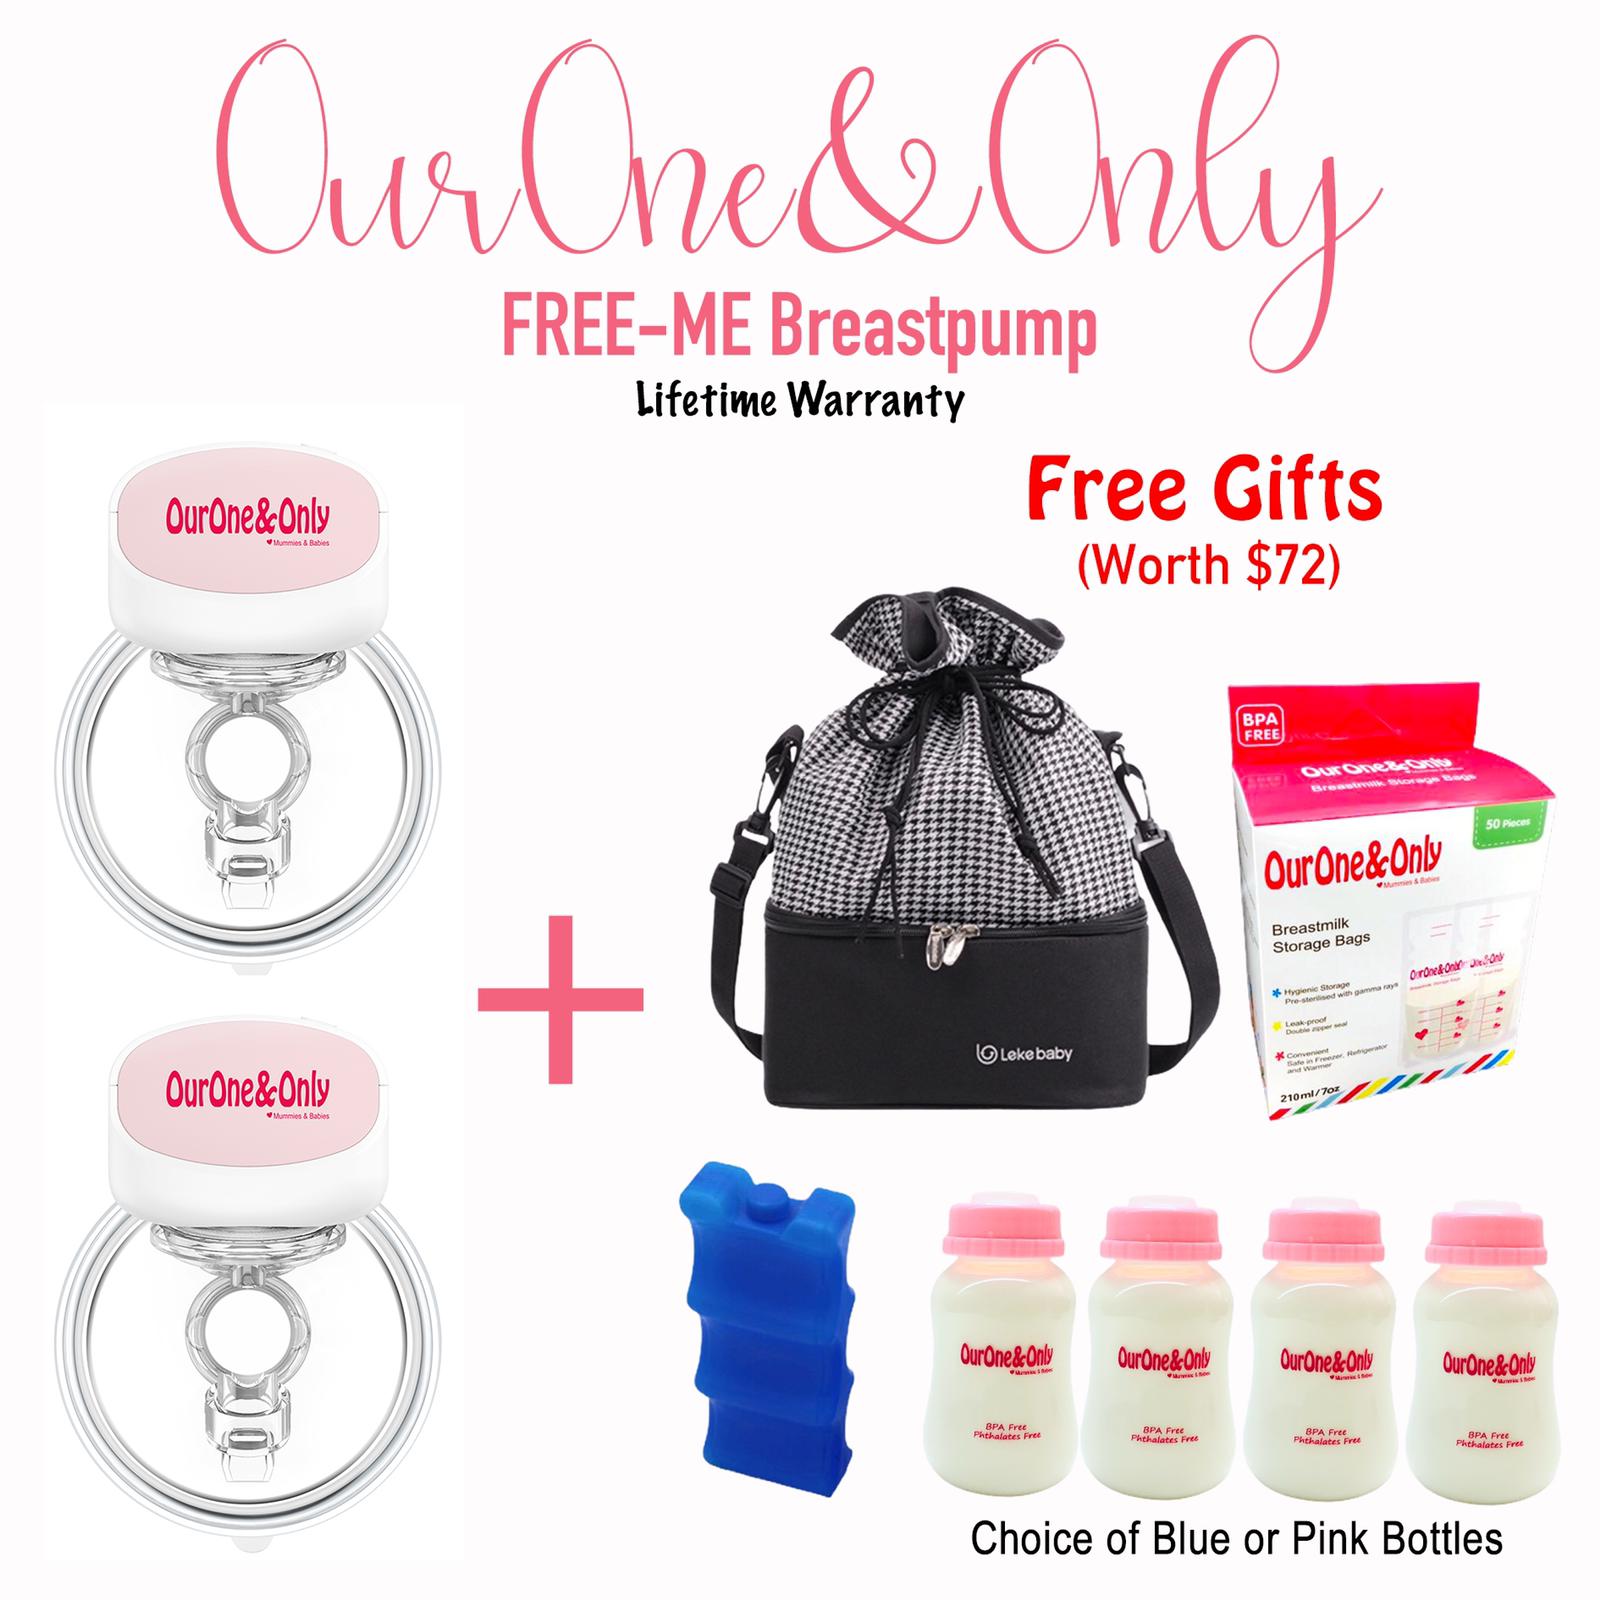 OurOne&Only FREE-ME Dual Breastpump Bundle (Breastpumps + Milkbags + Bottles + Ice Block + Carrier Bag)